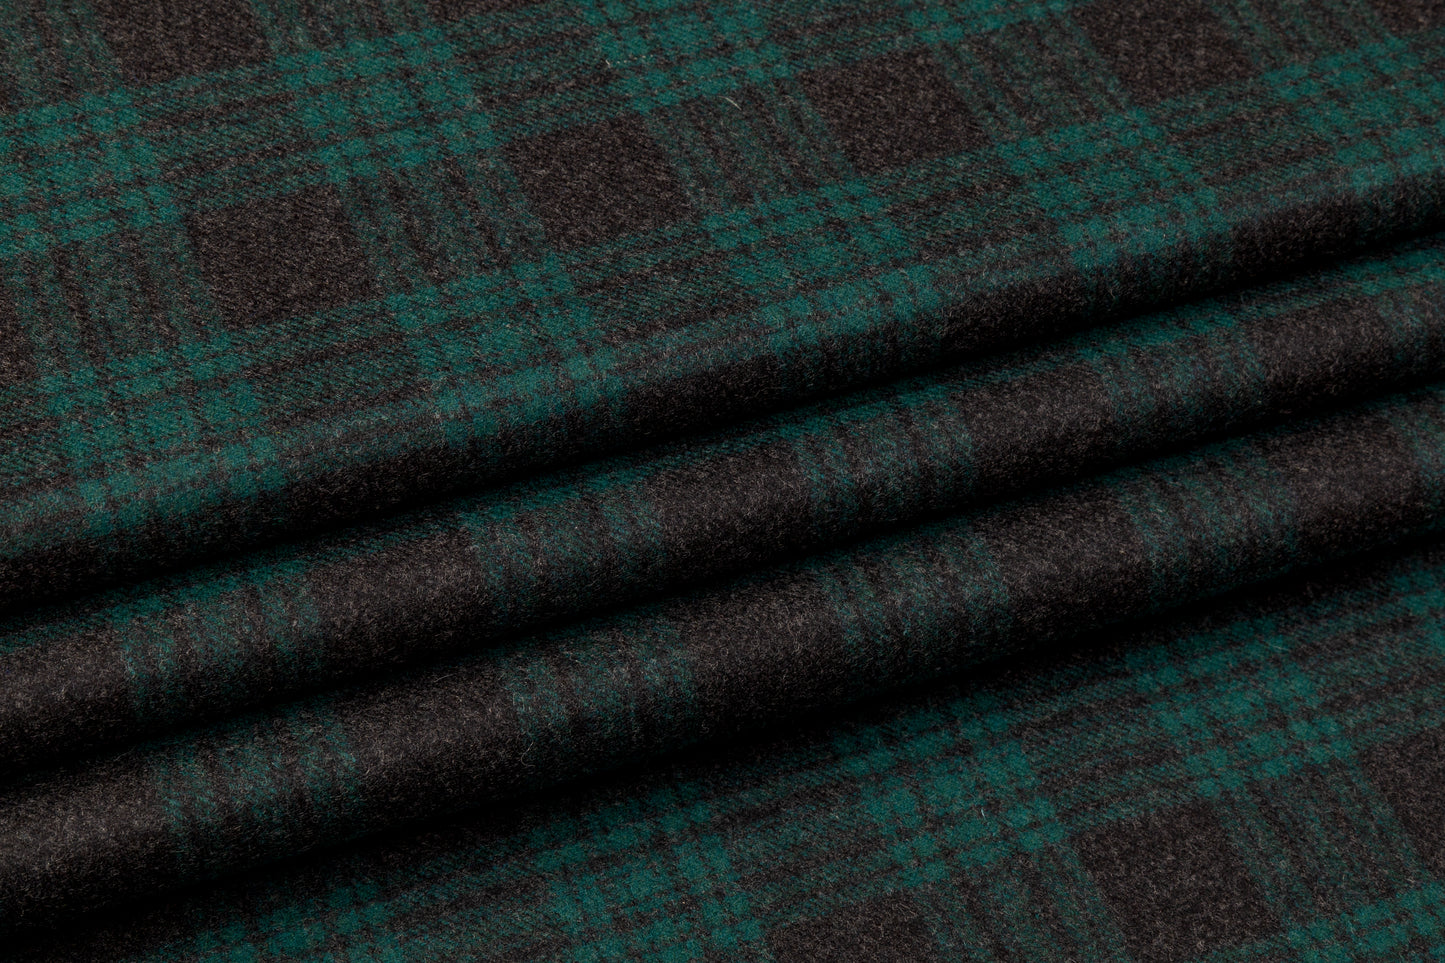 Plaid Italian Wool Suiting - Green / Charcoal